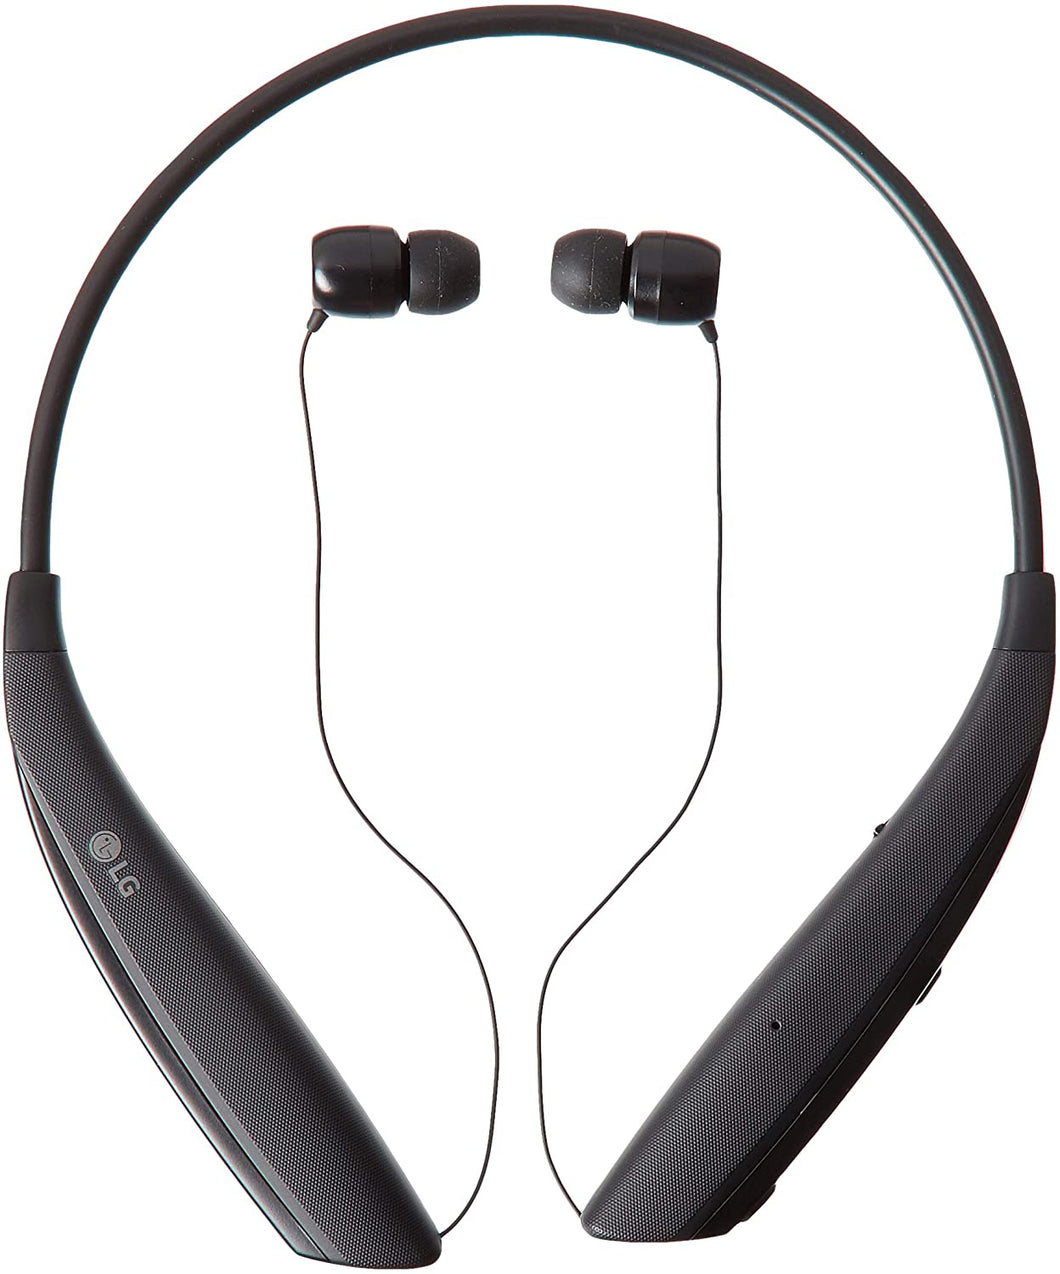 LG TONE Ultra (Hbs-830) Bluetooth Wireless Stereo Neckband Earbuds - Black